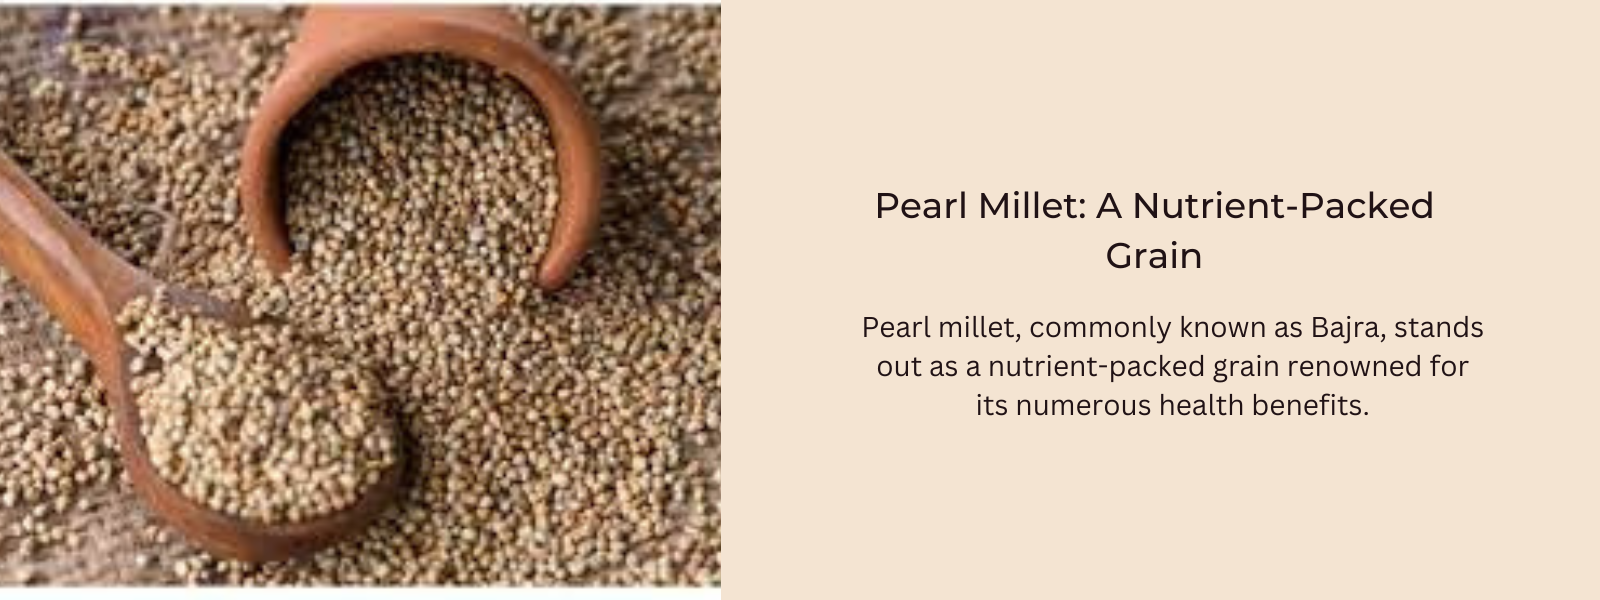 Pearl Millet (Bajra): A Nutrient-Packed Grain